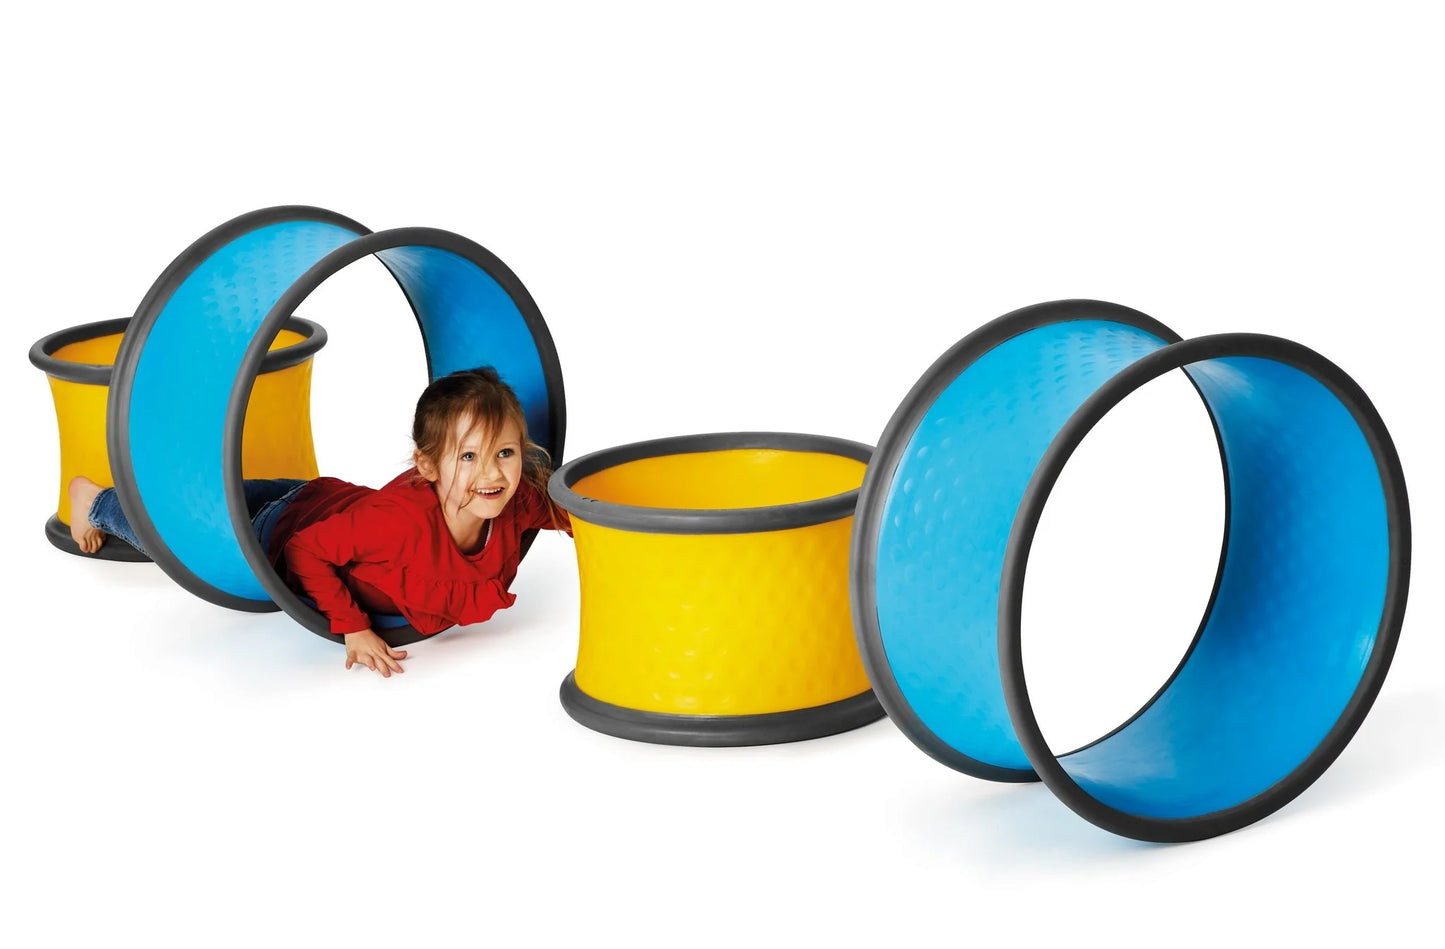 Gonge Body Wheels - Set of Small and Large 2 Pcs Set 體動滾筒大號藍色+小號黃色2件套裝